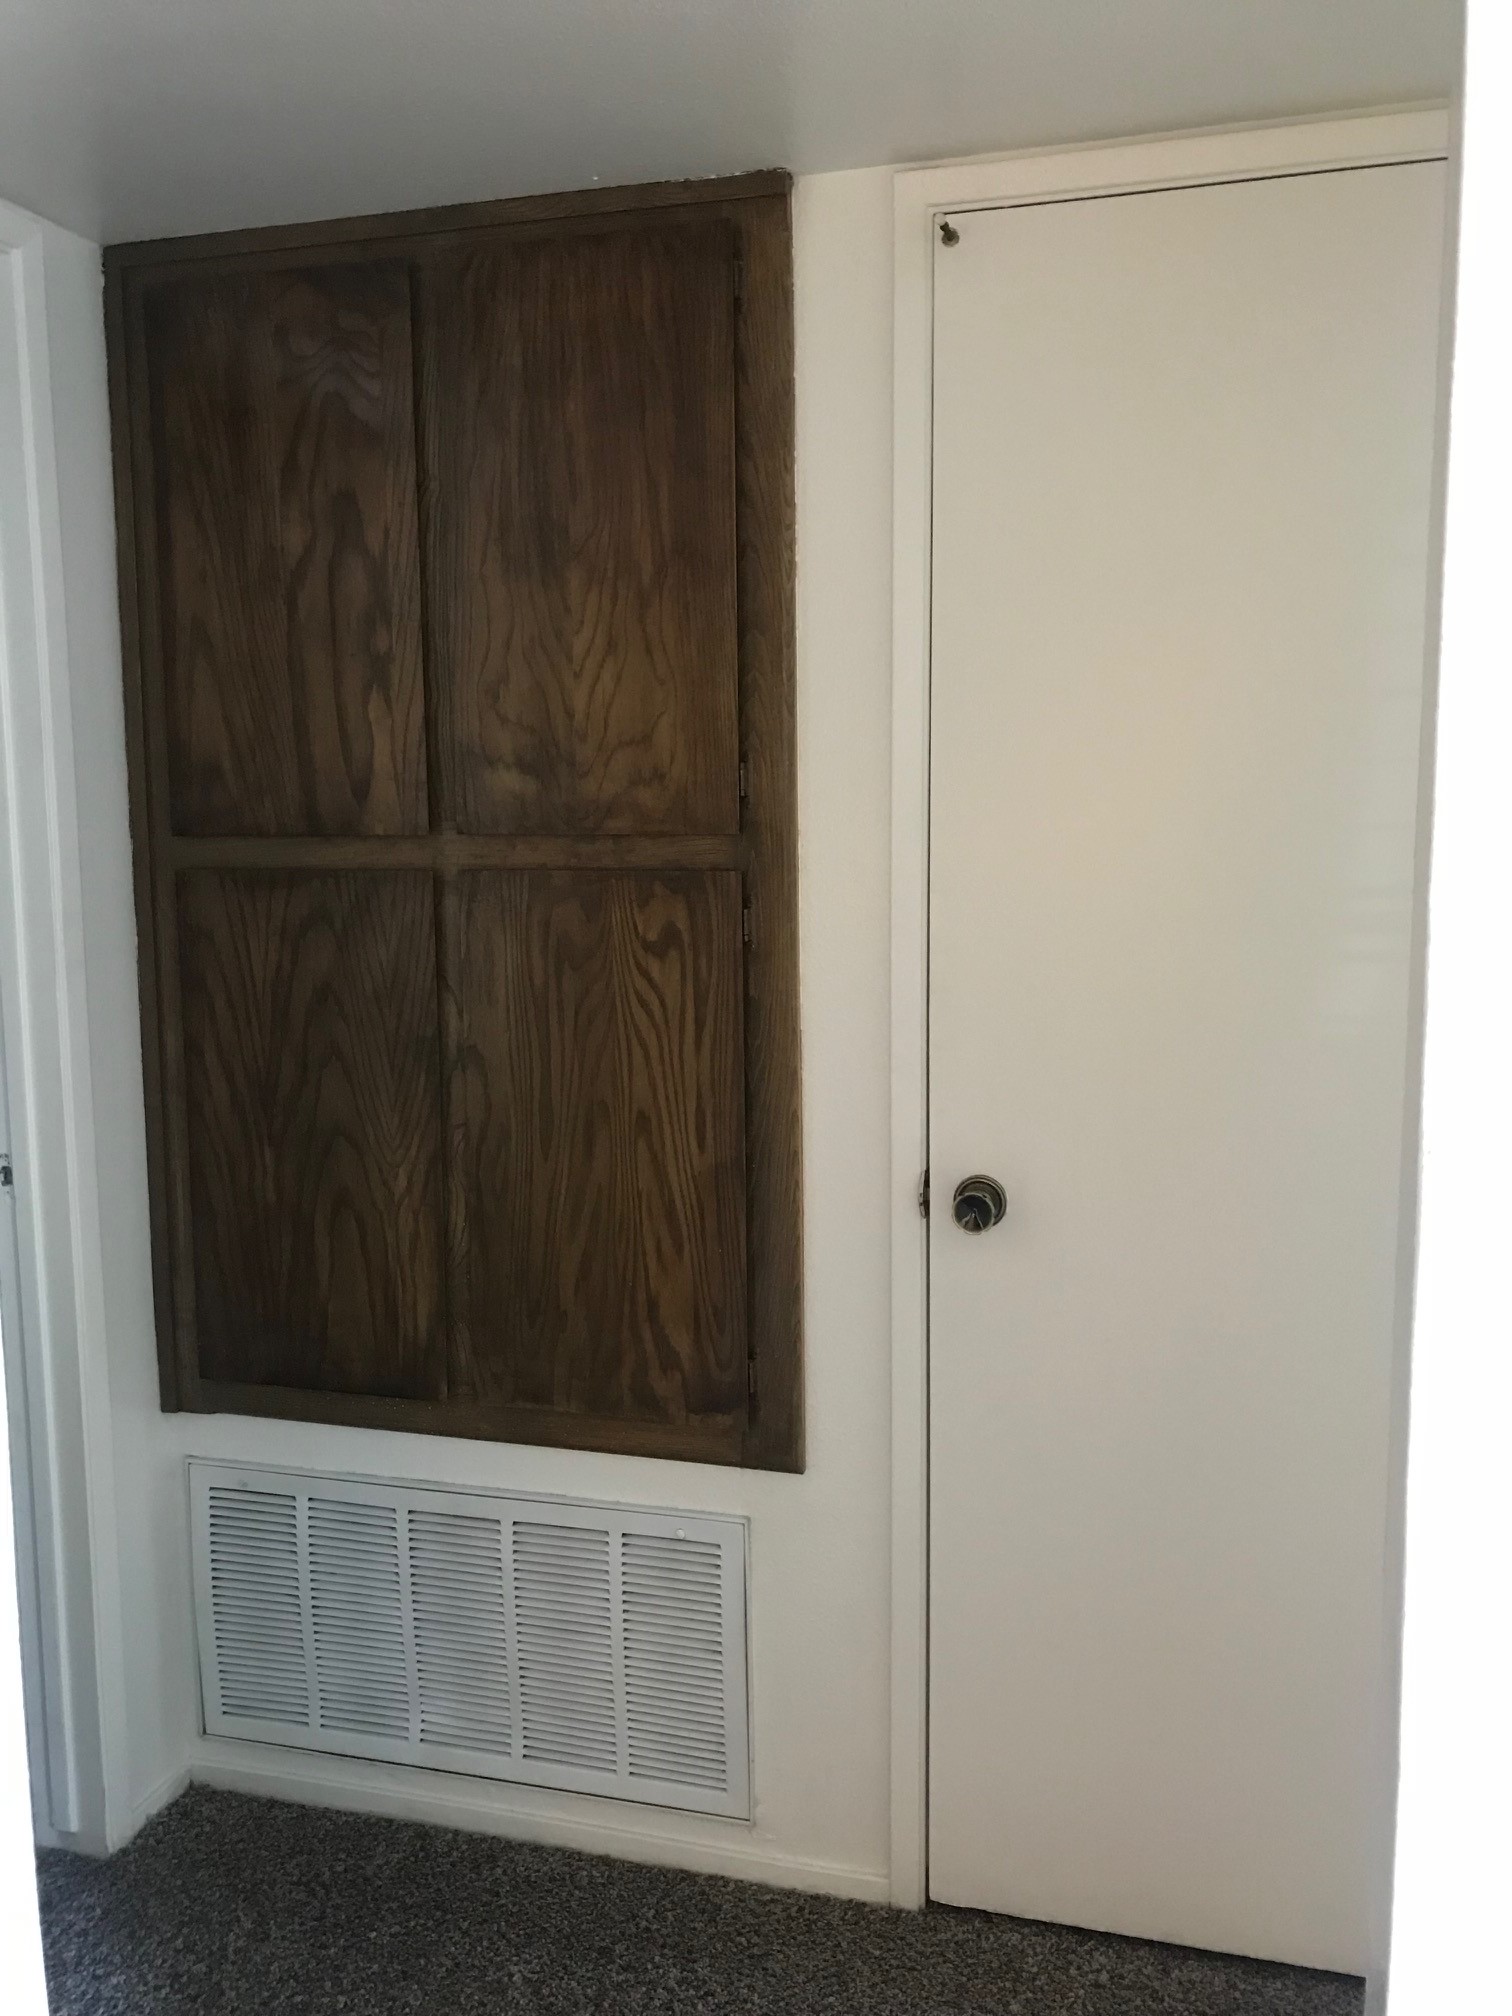 a white refrigerator freezer sitting inside of a wooden door